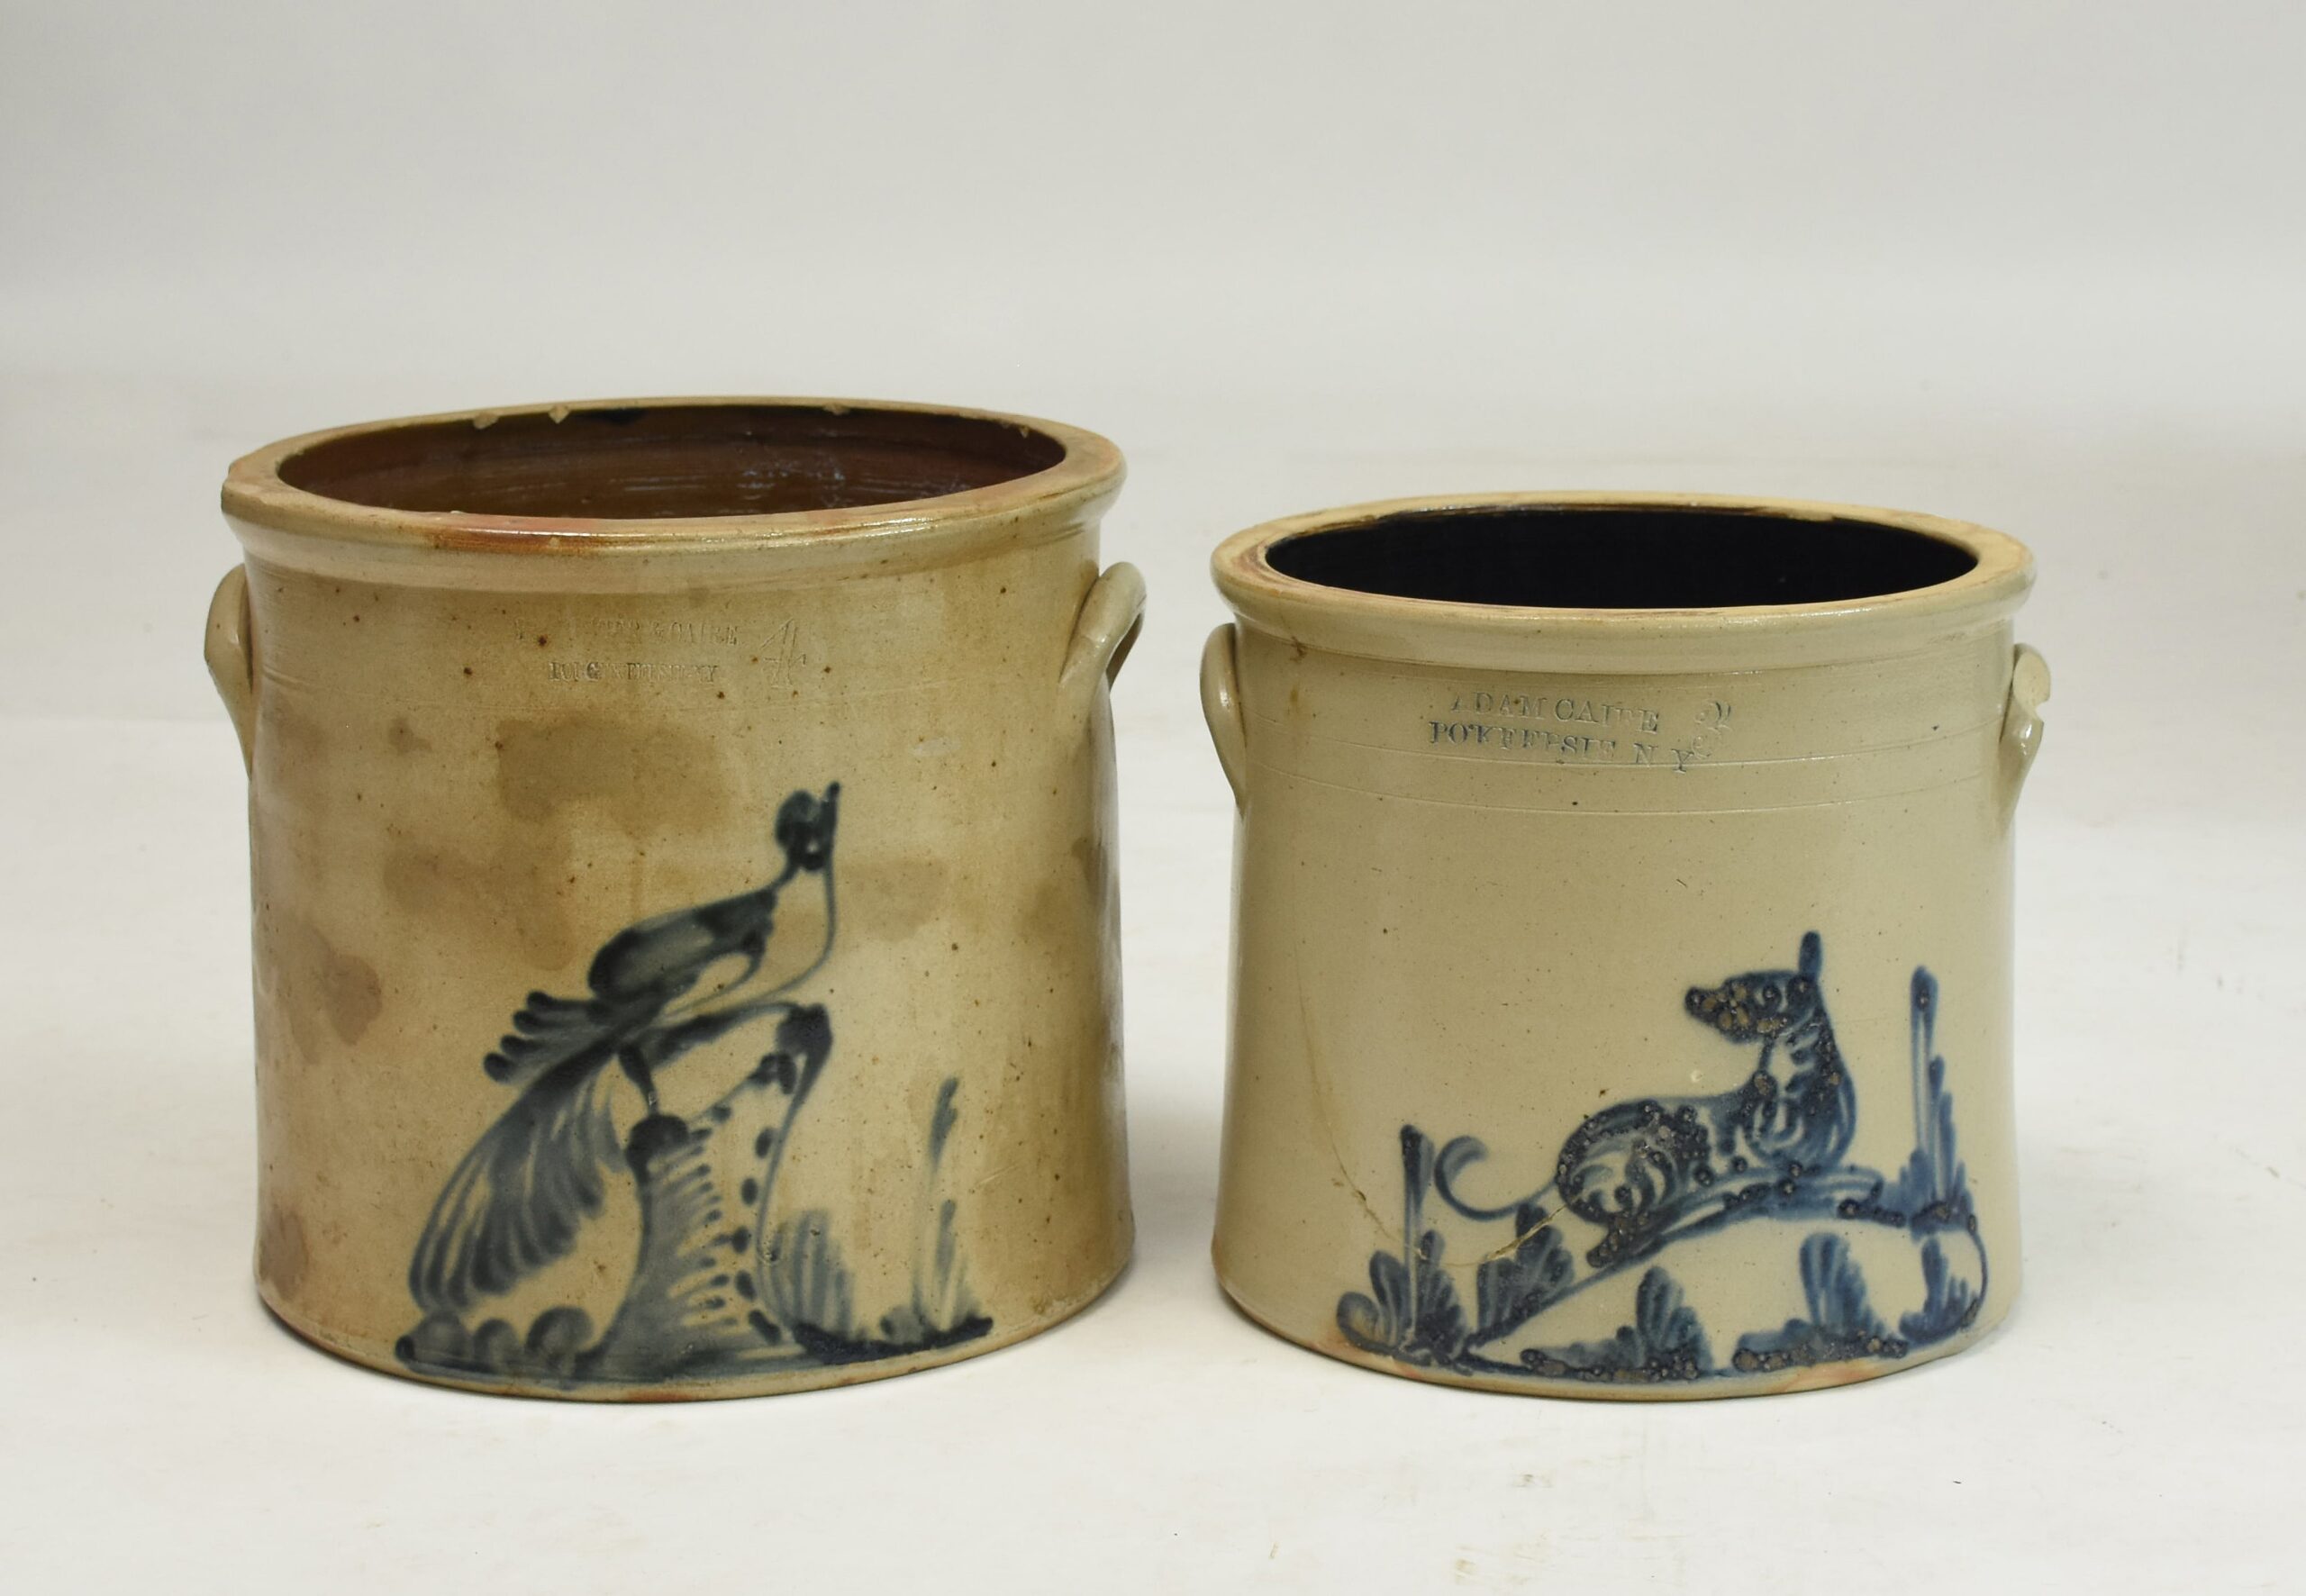 Two stoneware crocks, bird on stump, dog, Poughkeepsie NY by Caire